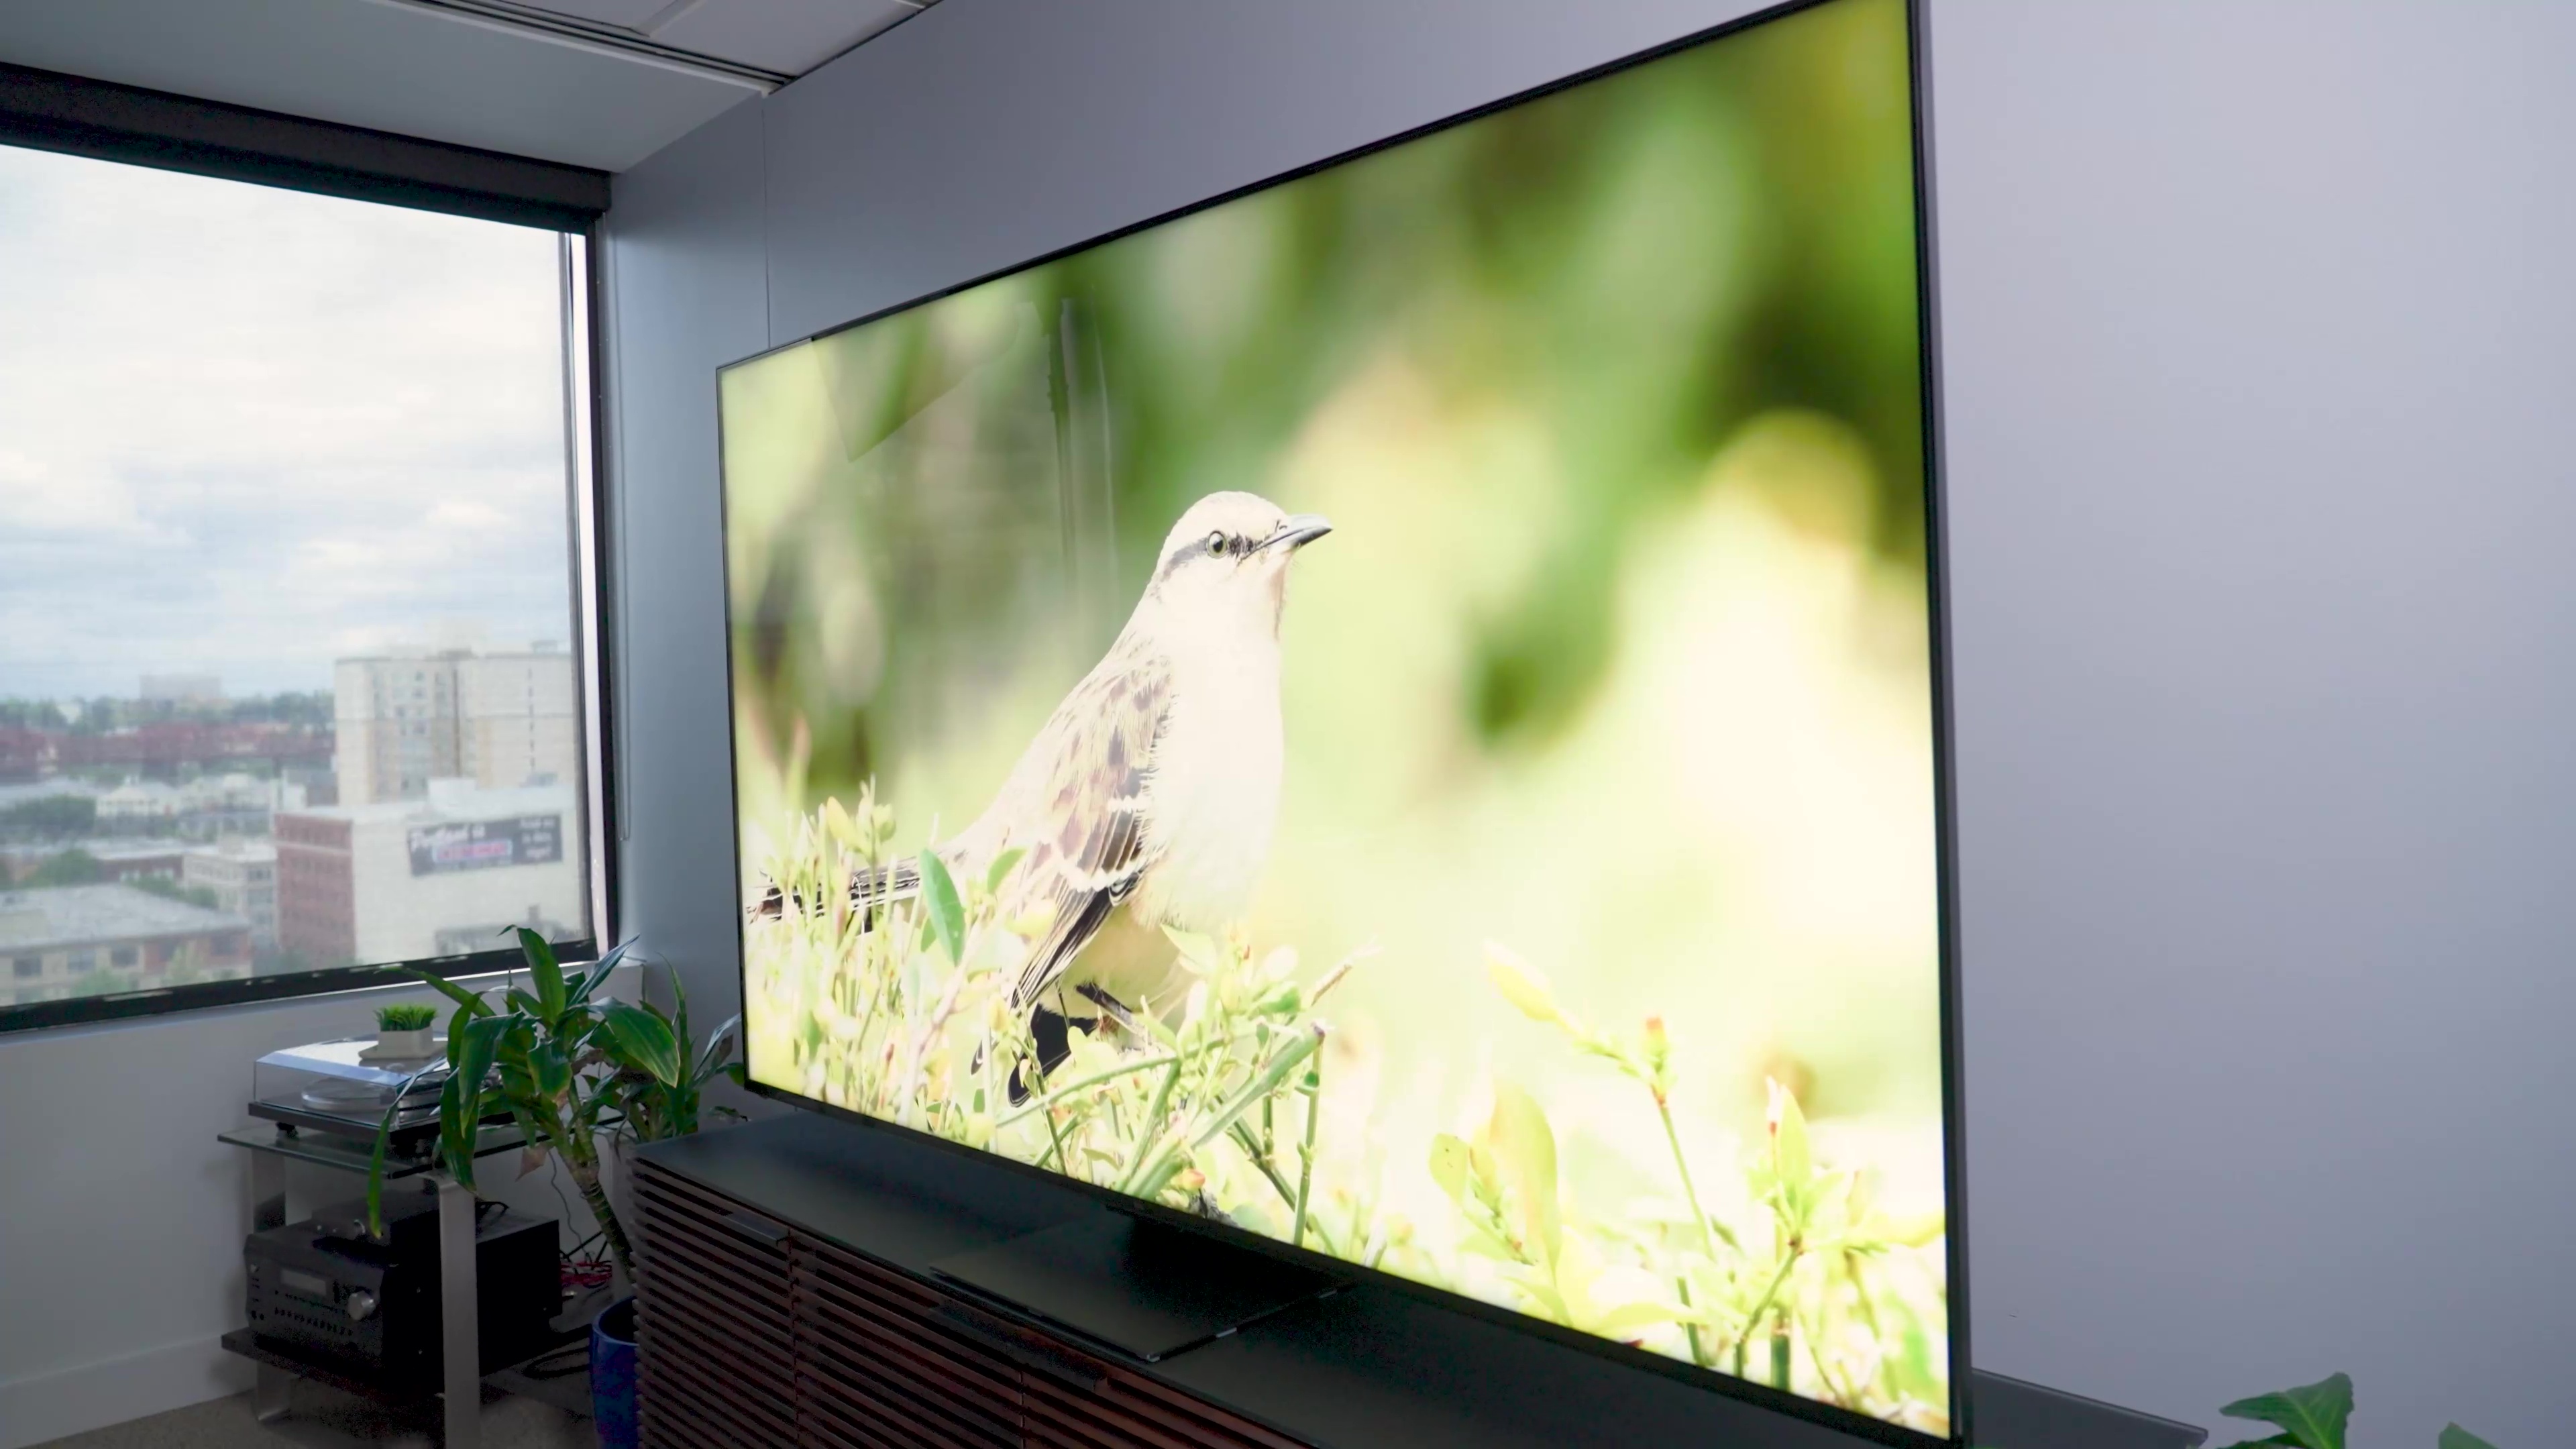 Samsung TV vs LG TV: which TV brand is better?